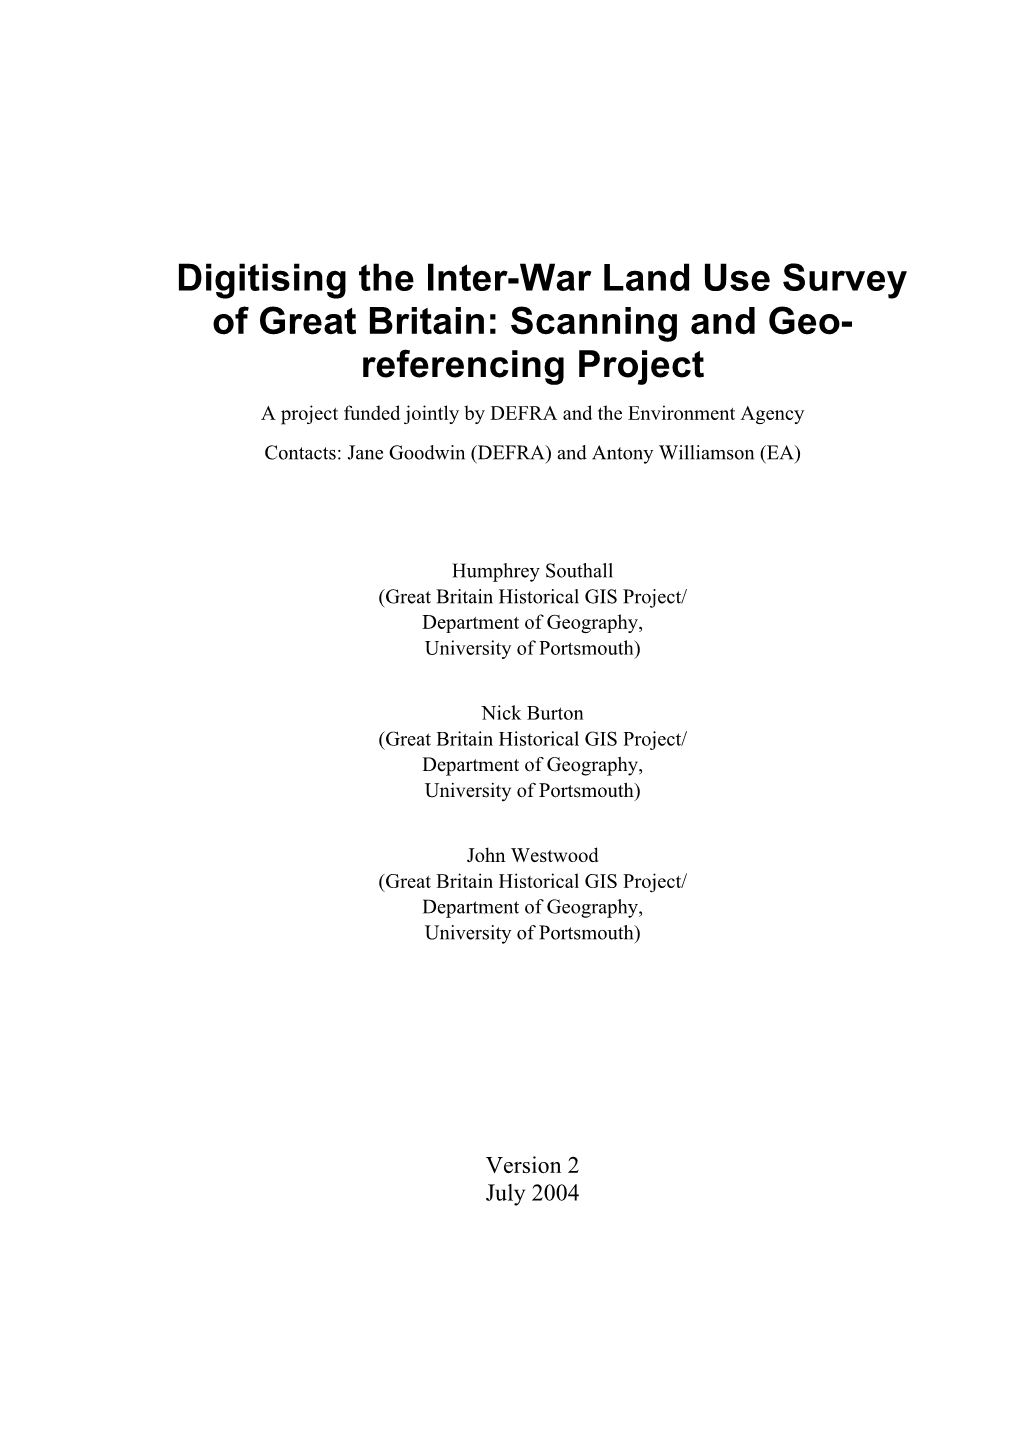 Digitising the Inter-War Land Use Survey of Great Britain: Scanning